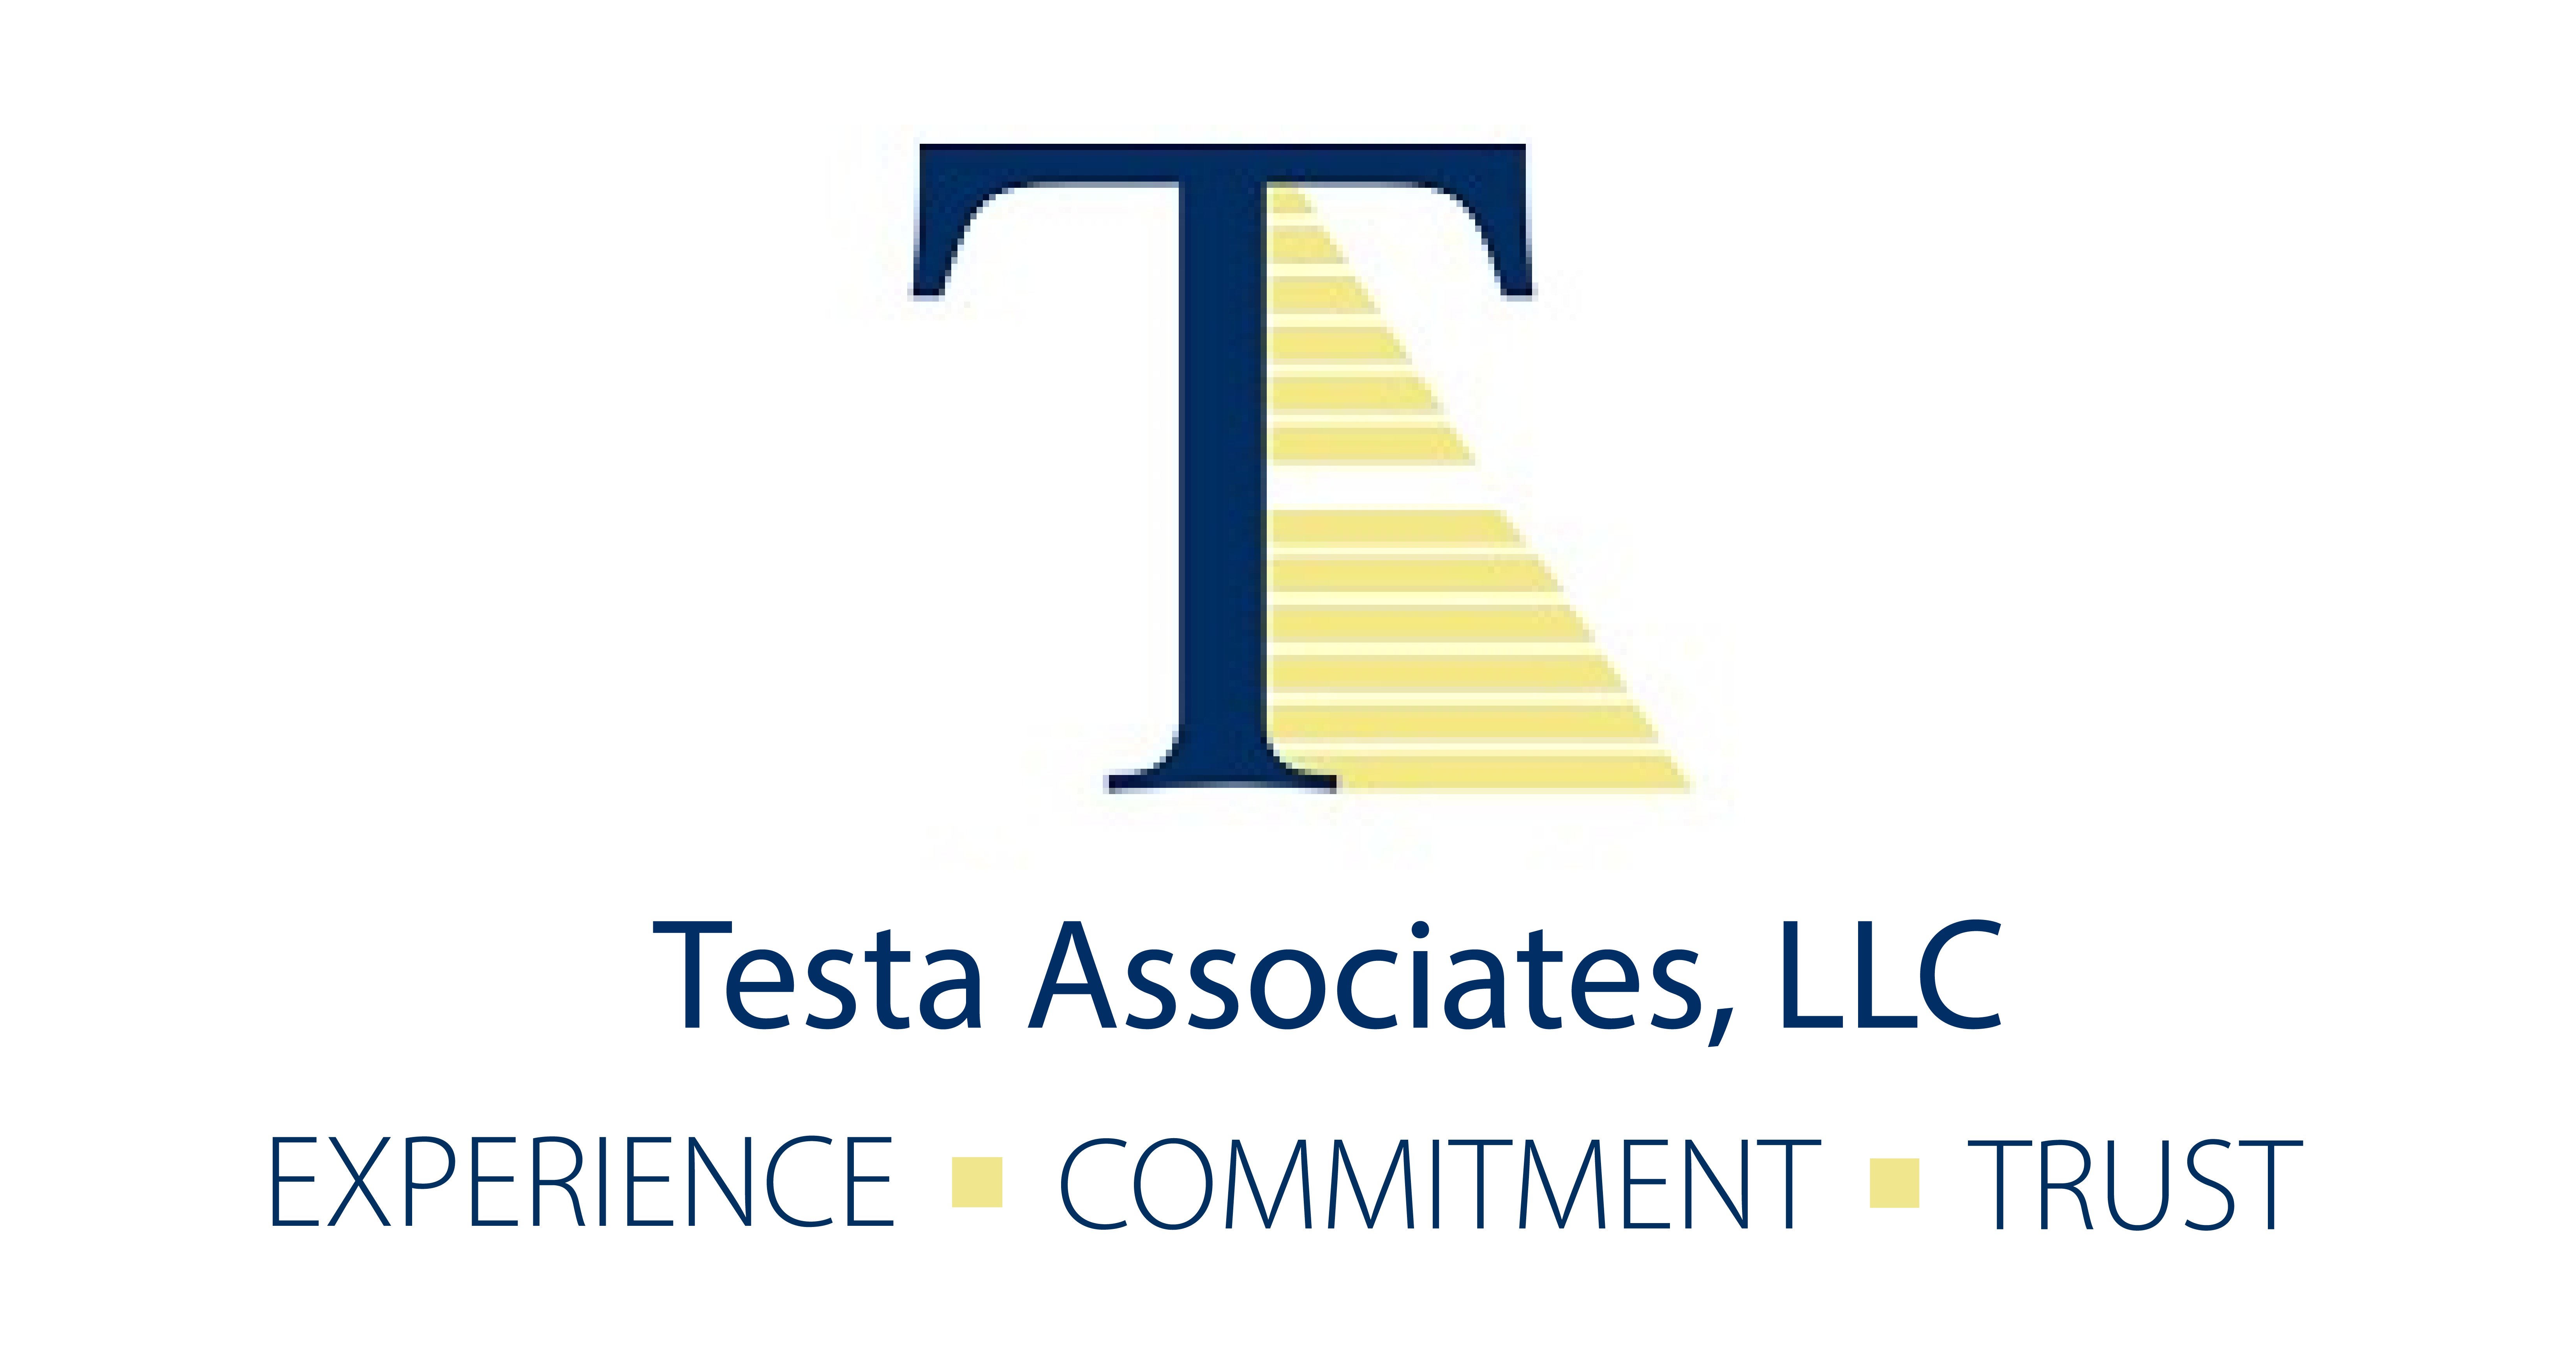 Testa Associates, LLC